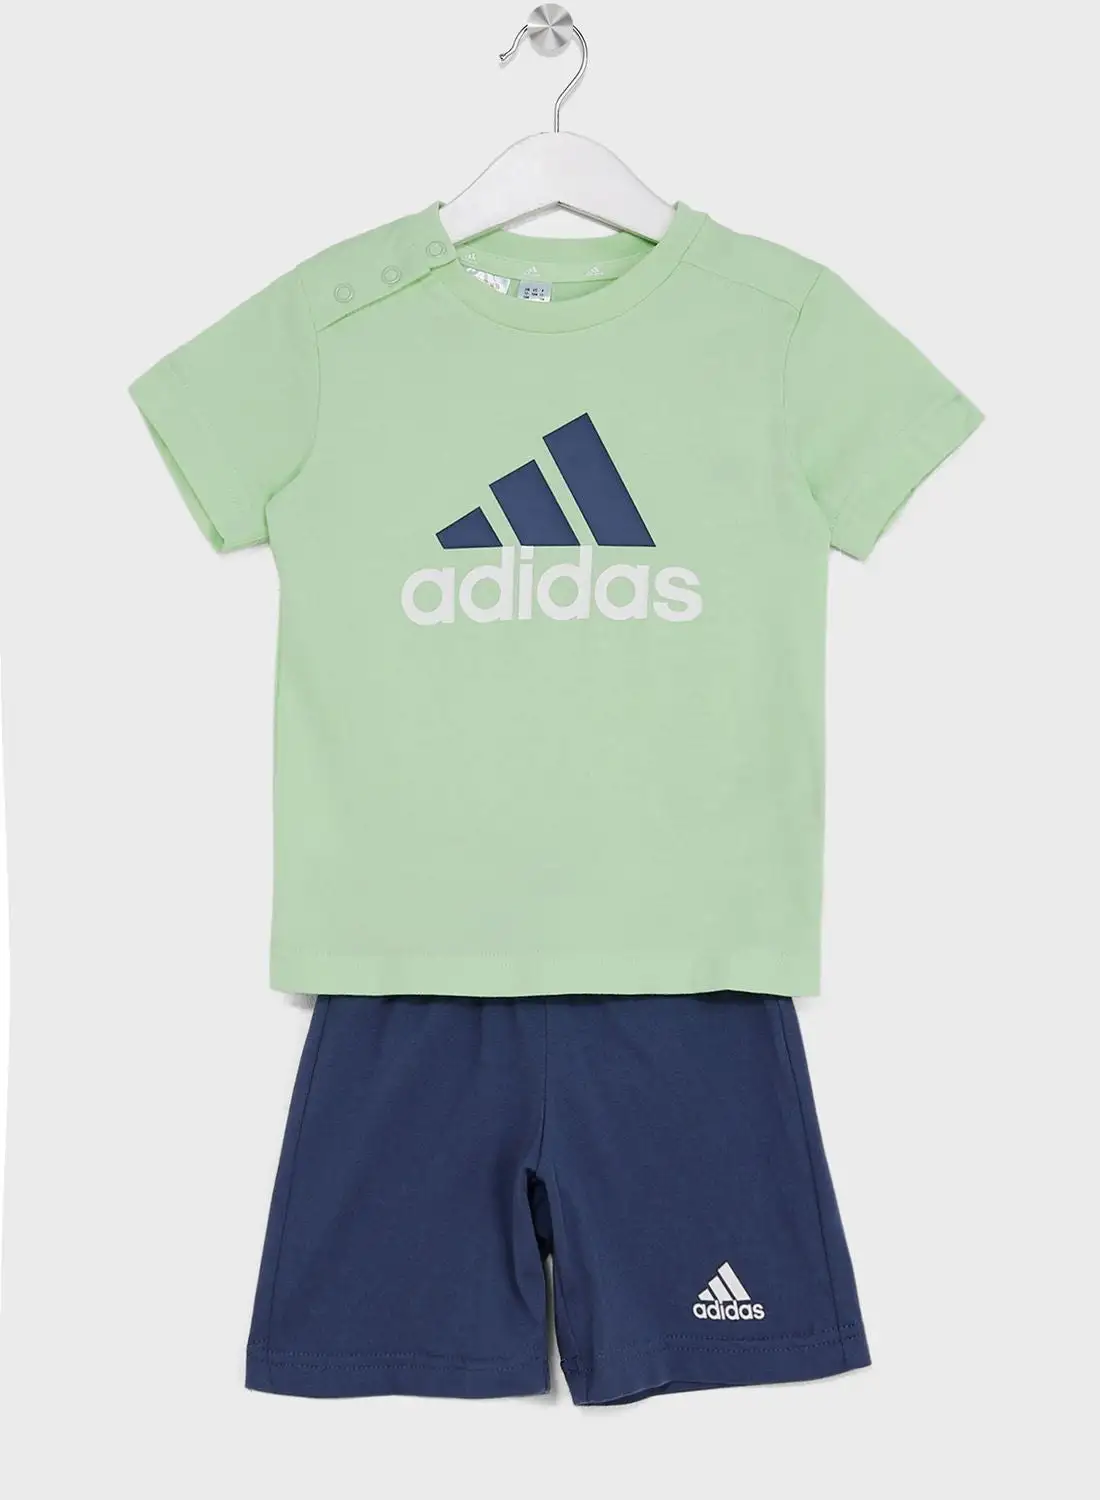 Adidas Infant Big Logo Set